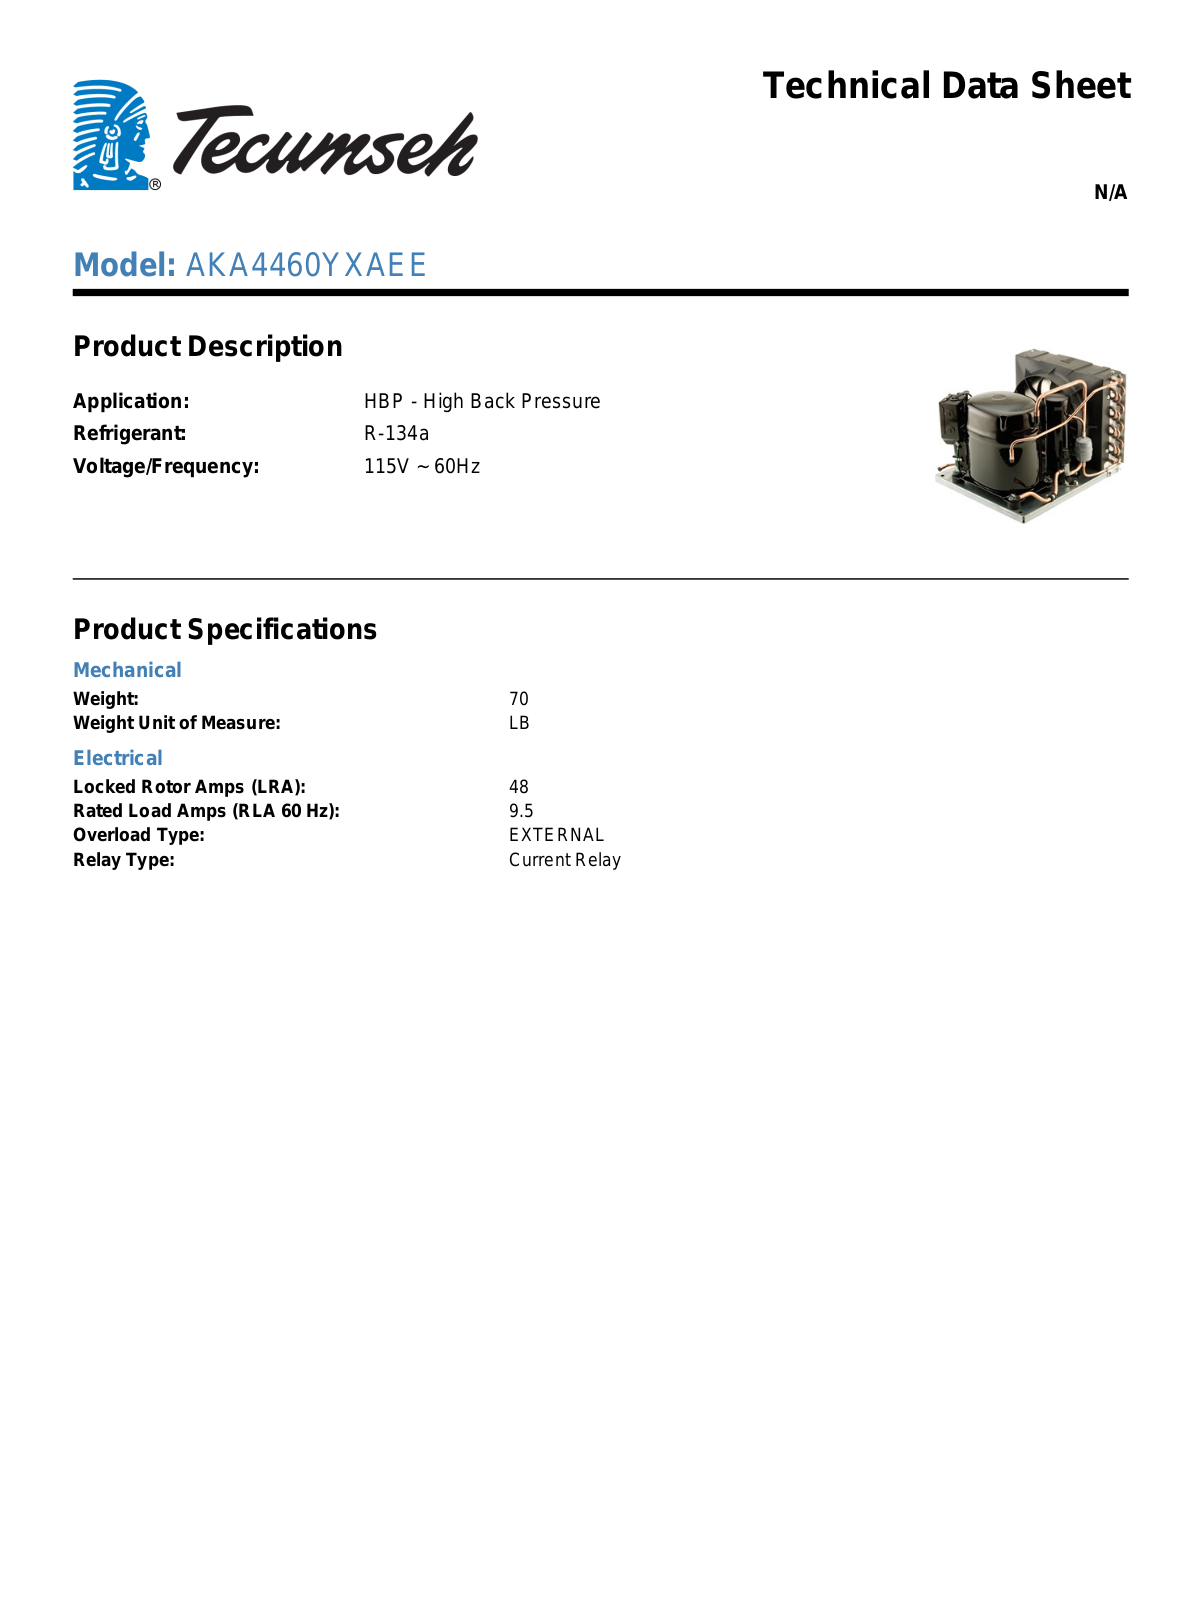 Tecumseh AKA4460YXAEE Technical Data Sheet